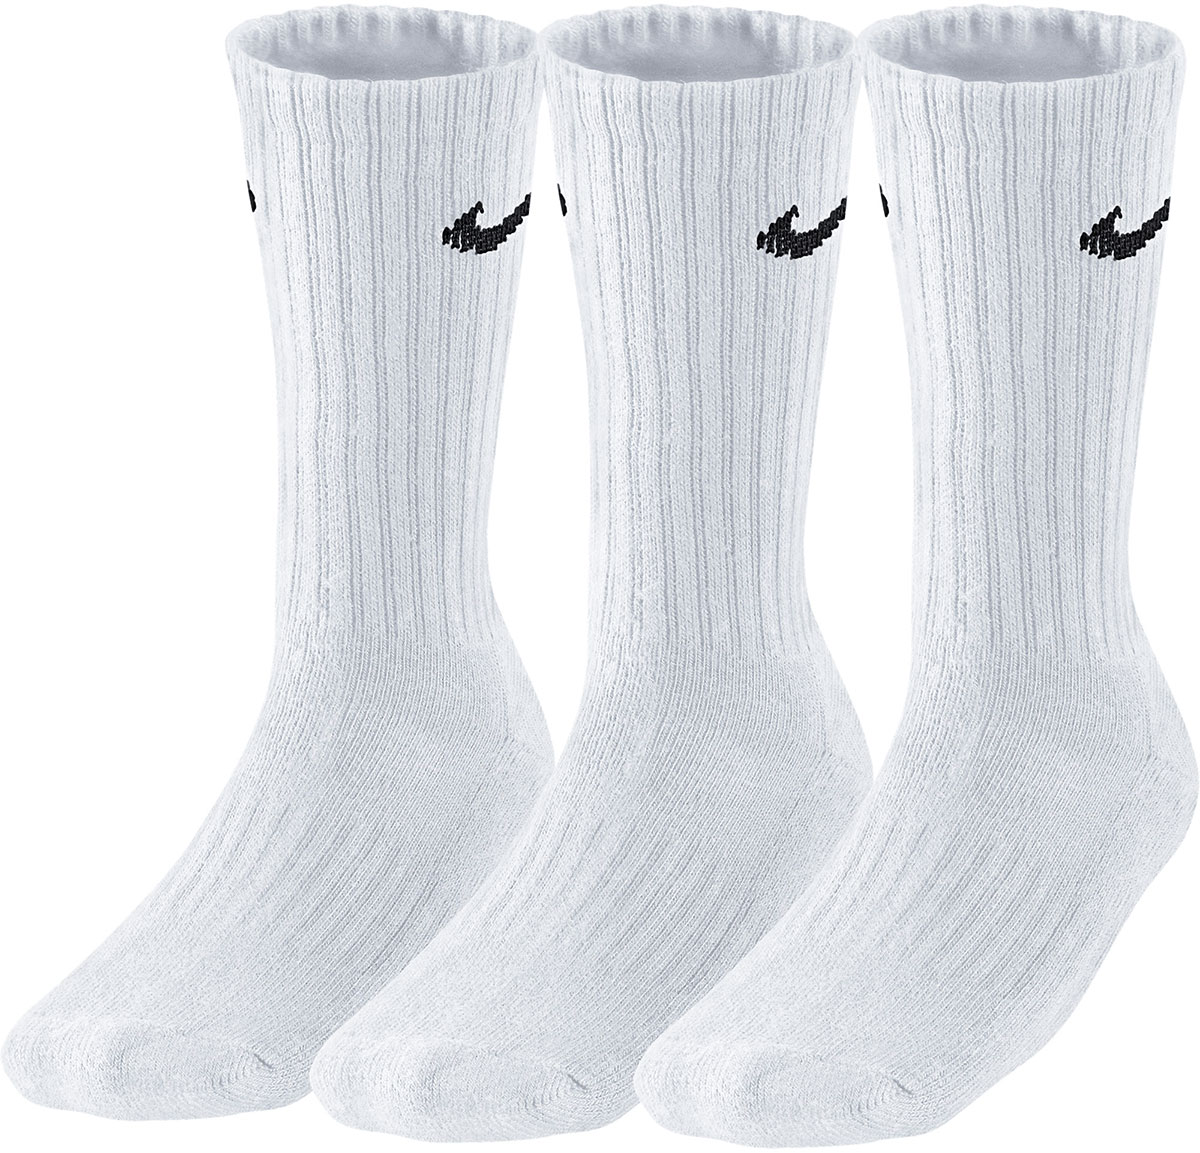 3PPK VALUE COTTON CREW - Sports socks